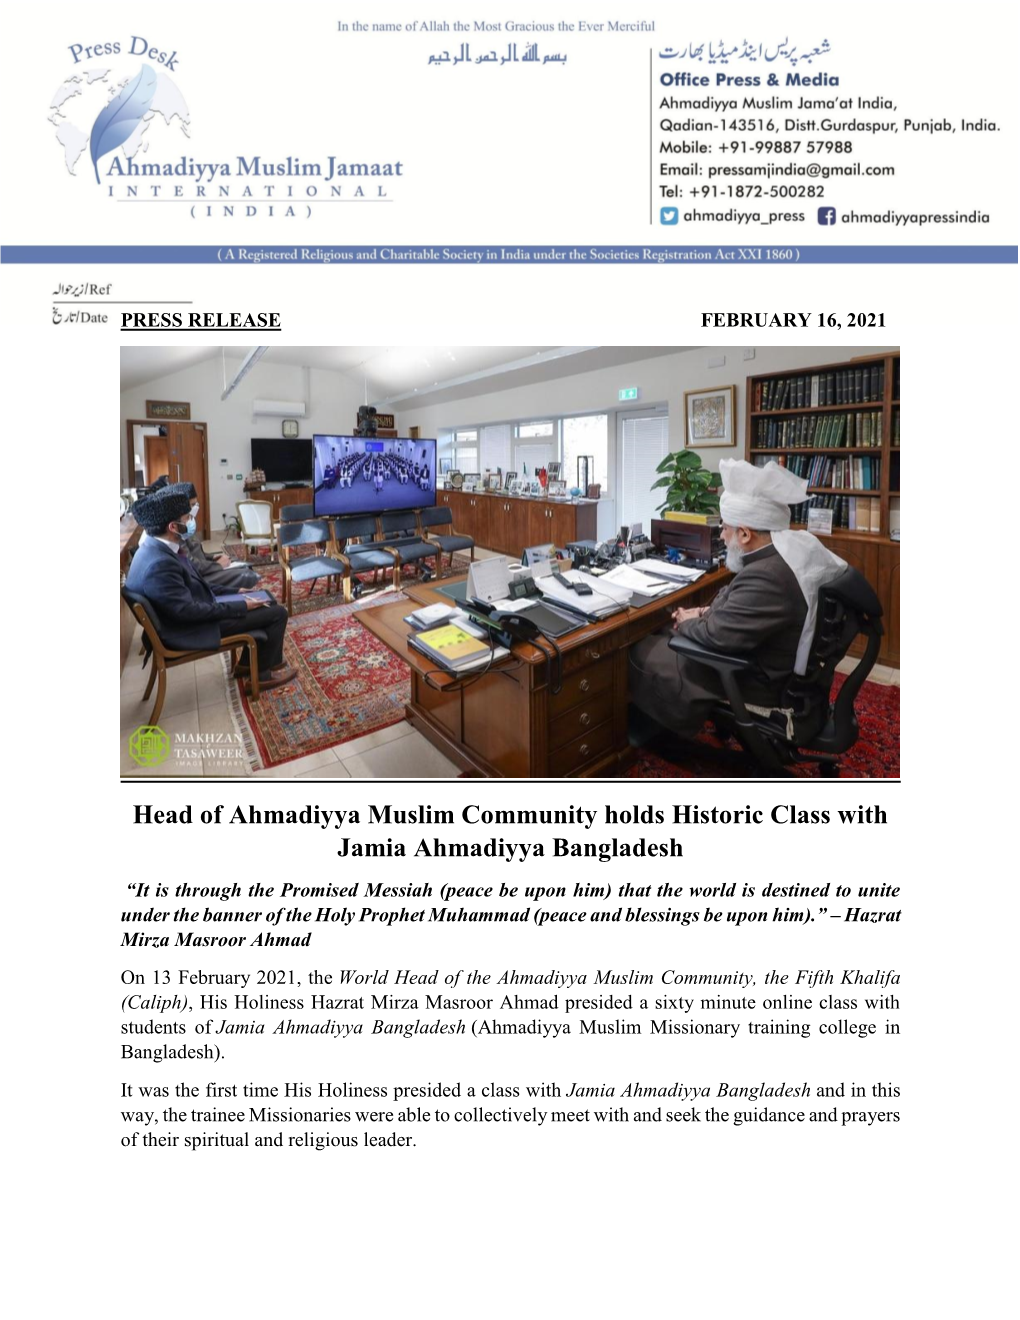 Head of Ahmadiyya Muslim Community Holds Historic Class With